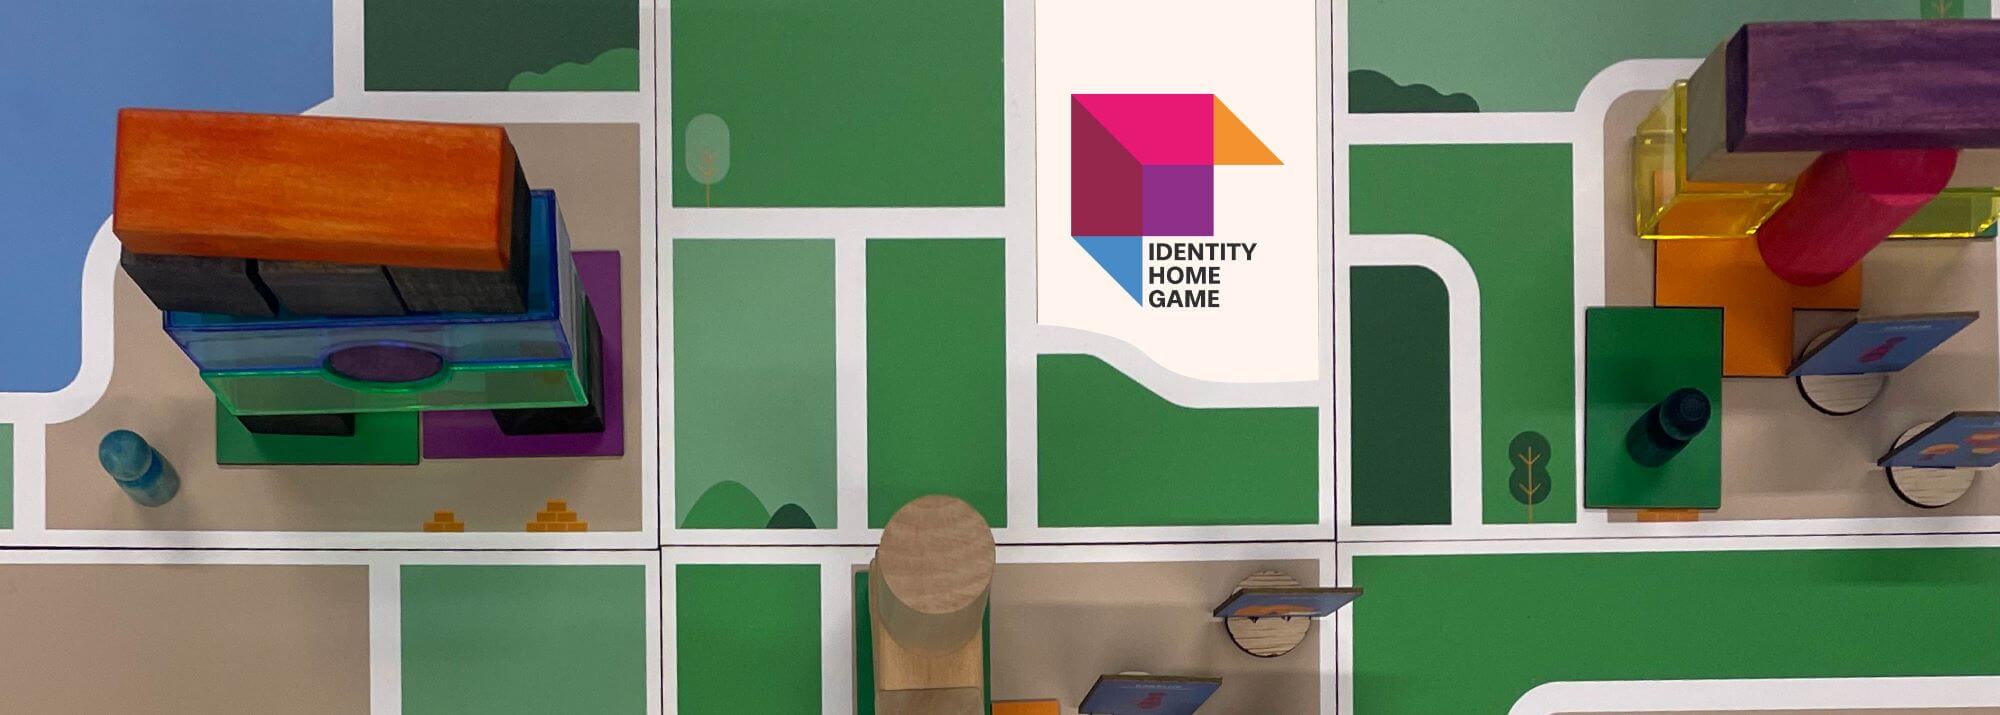 Identity Home Game met logo